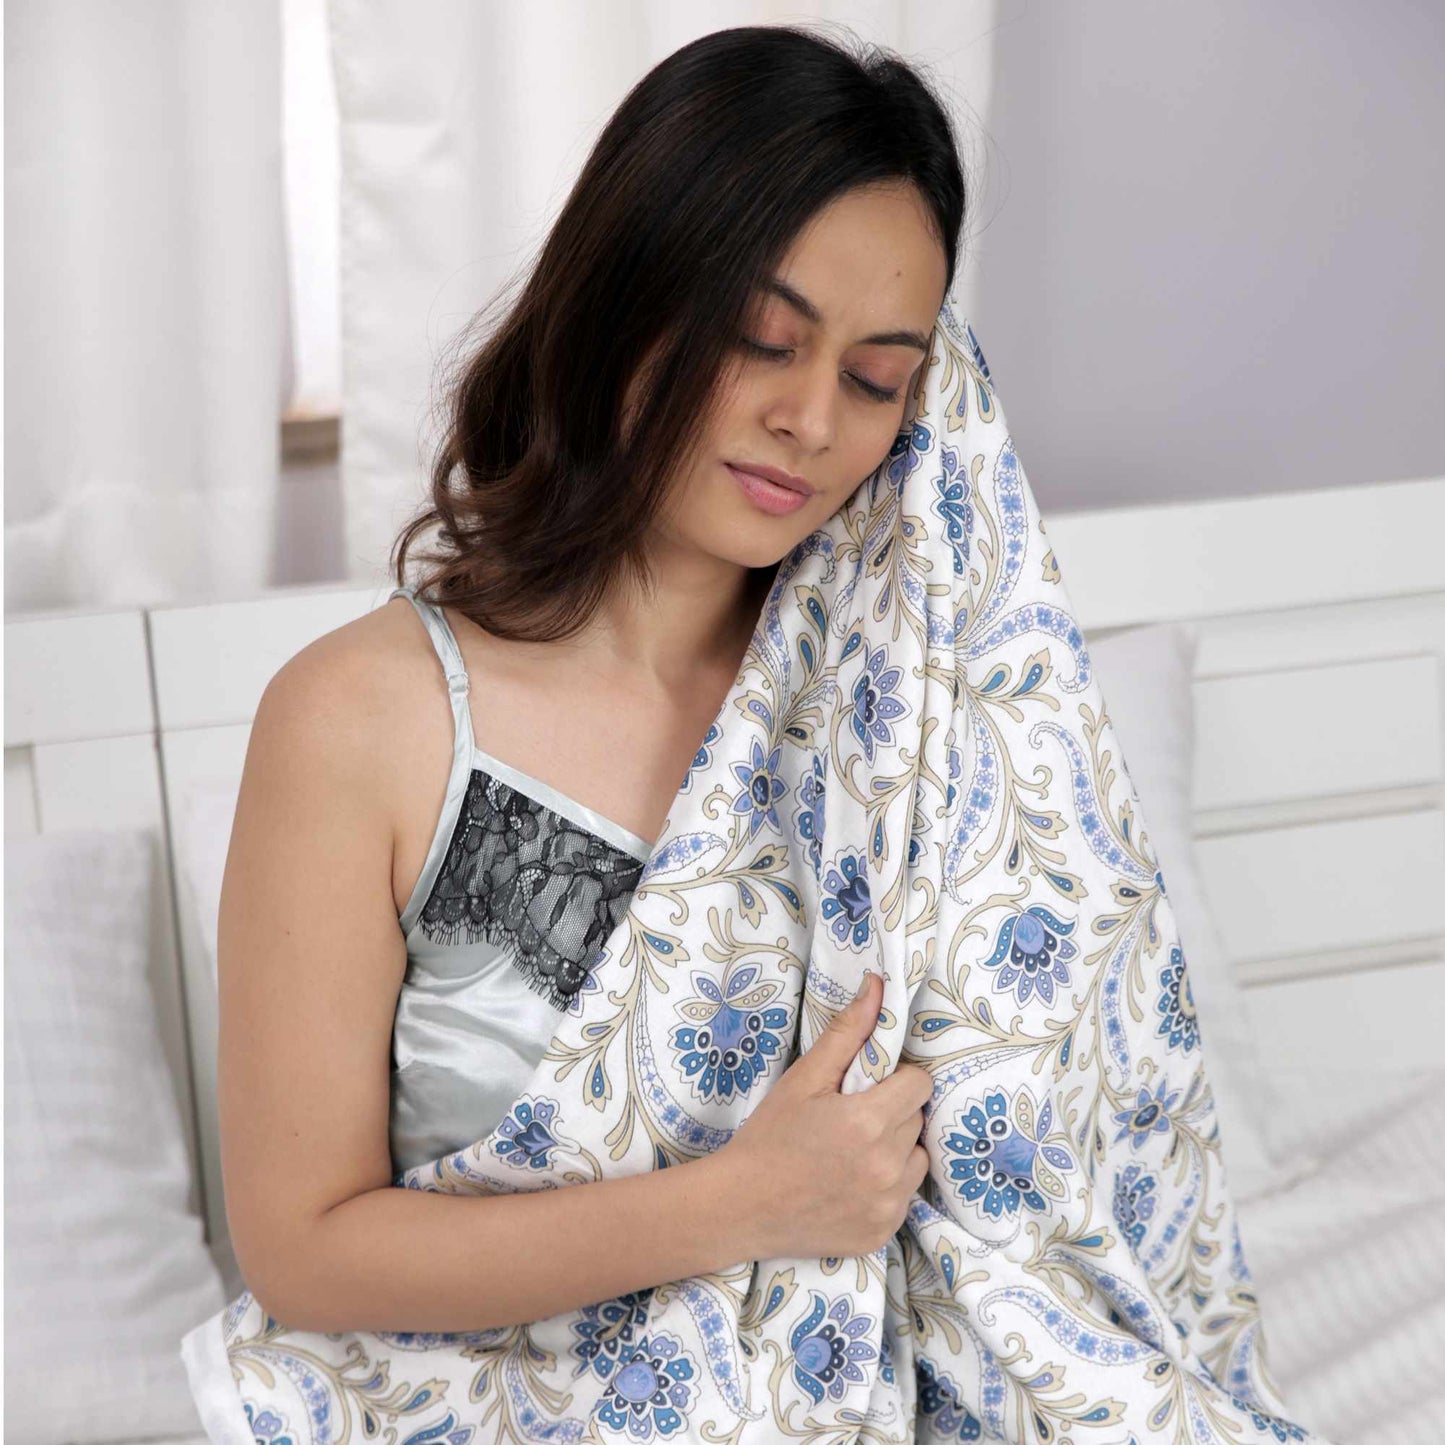 120 GSM Reversible Floral Print Cotton Dohar For Single Bed